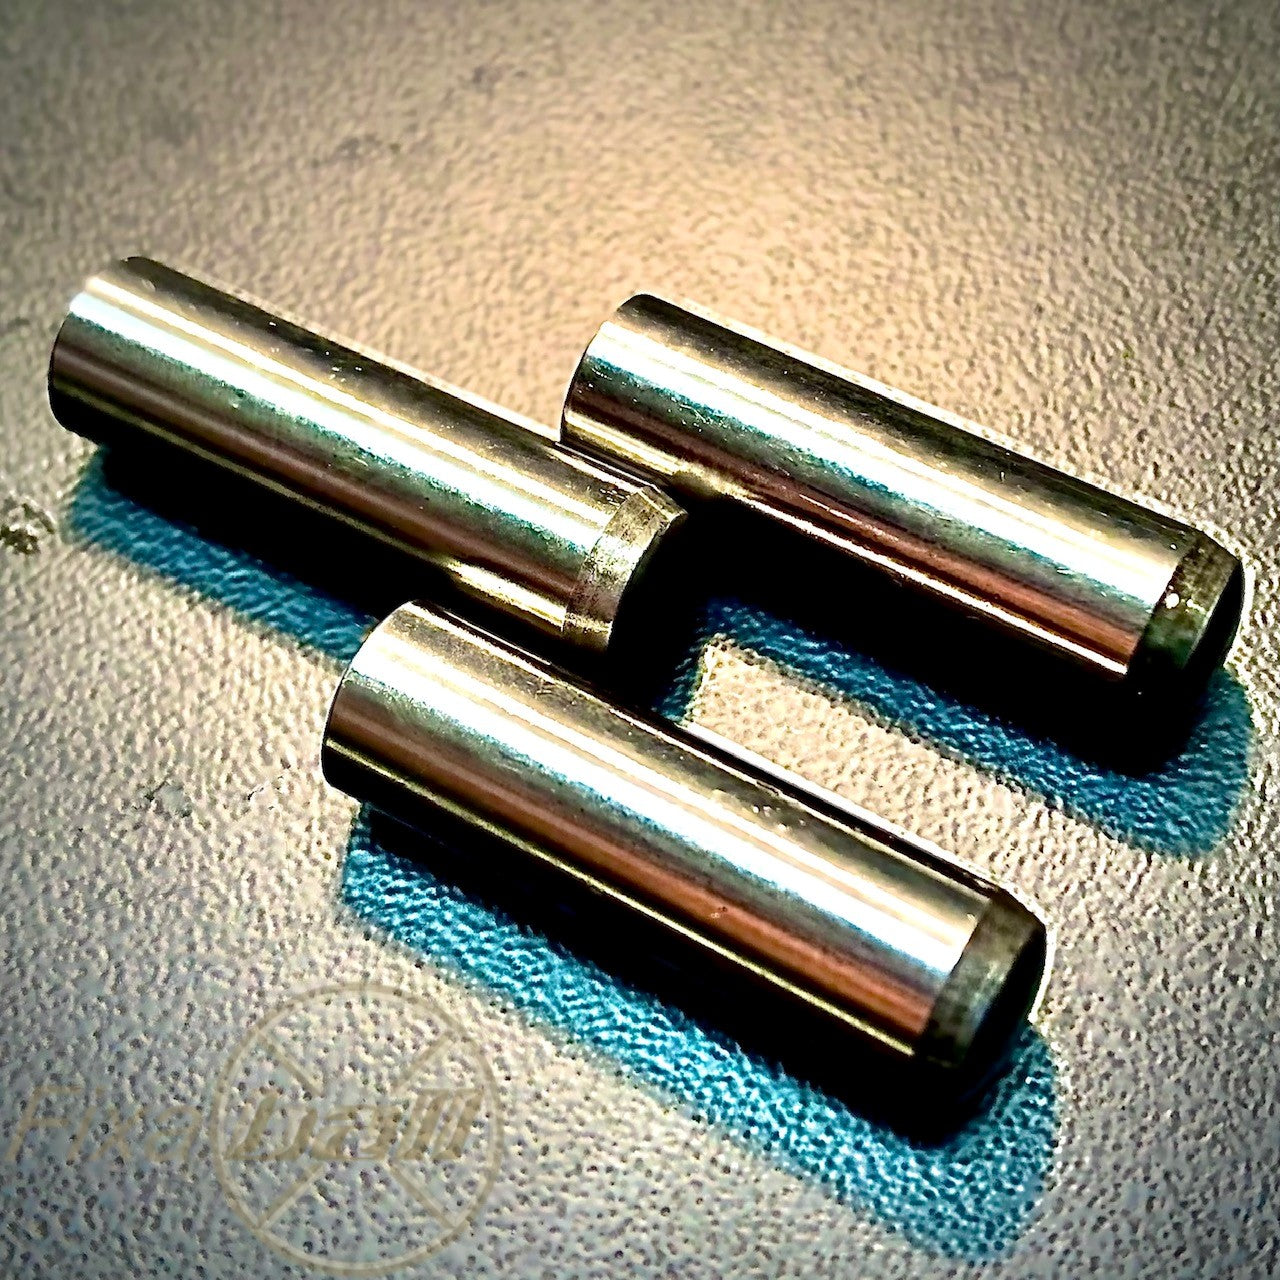 6mm, Dowel Pins Hardened & Ground, Steel, DIN 6325 Dowel Pins 6mm, Dowel Pins Hardened & Ground, Steel, DIN 6325 Dowel Pins – Harden and Ground